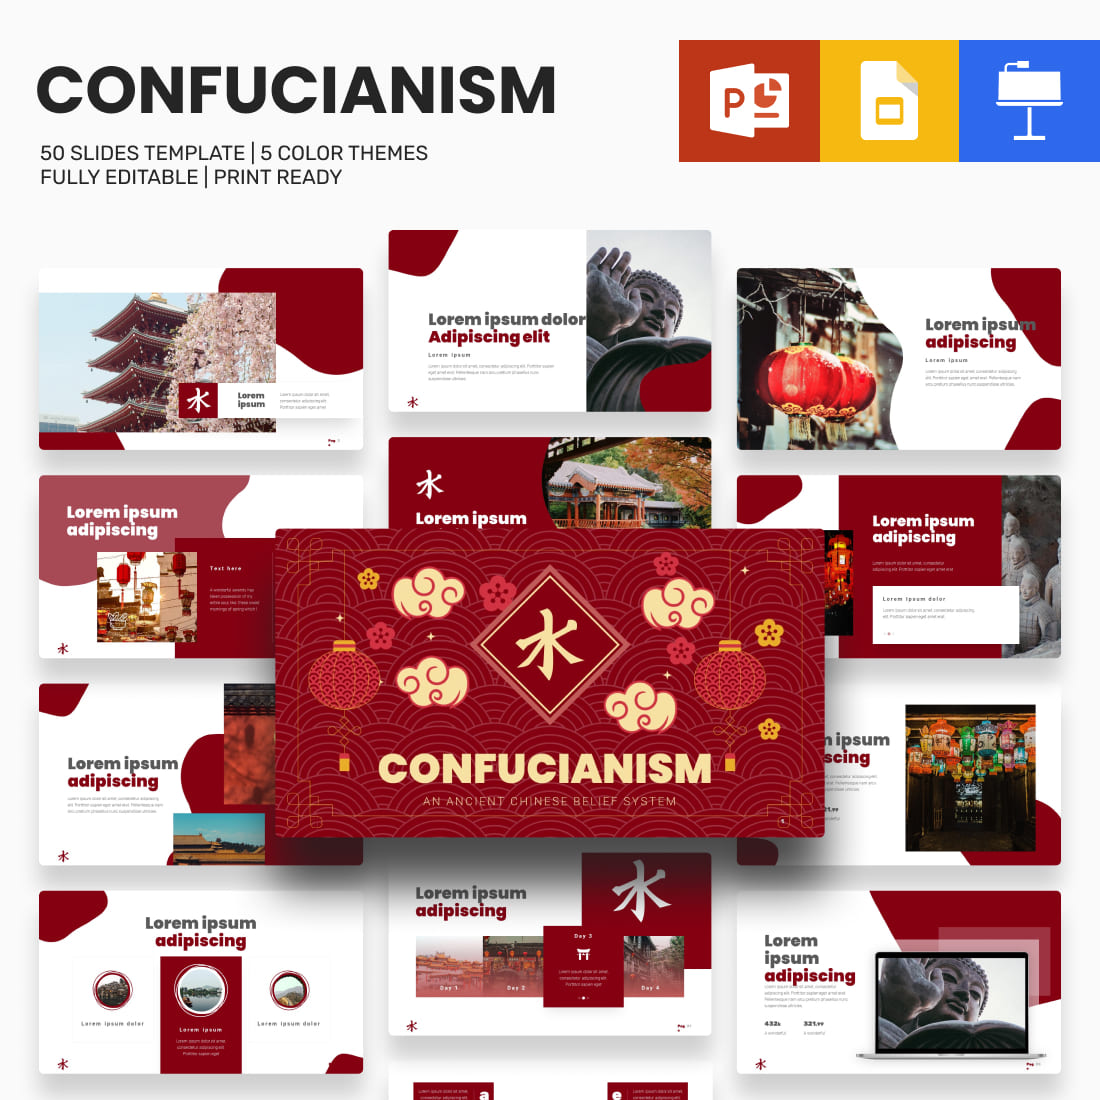 Confucianism presentation template Example.